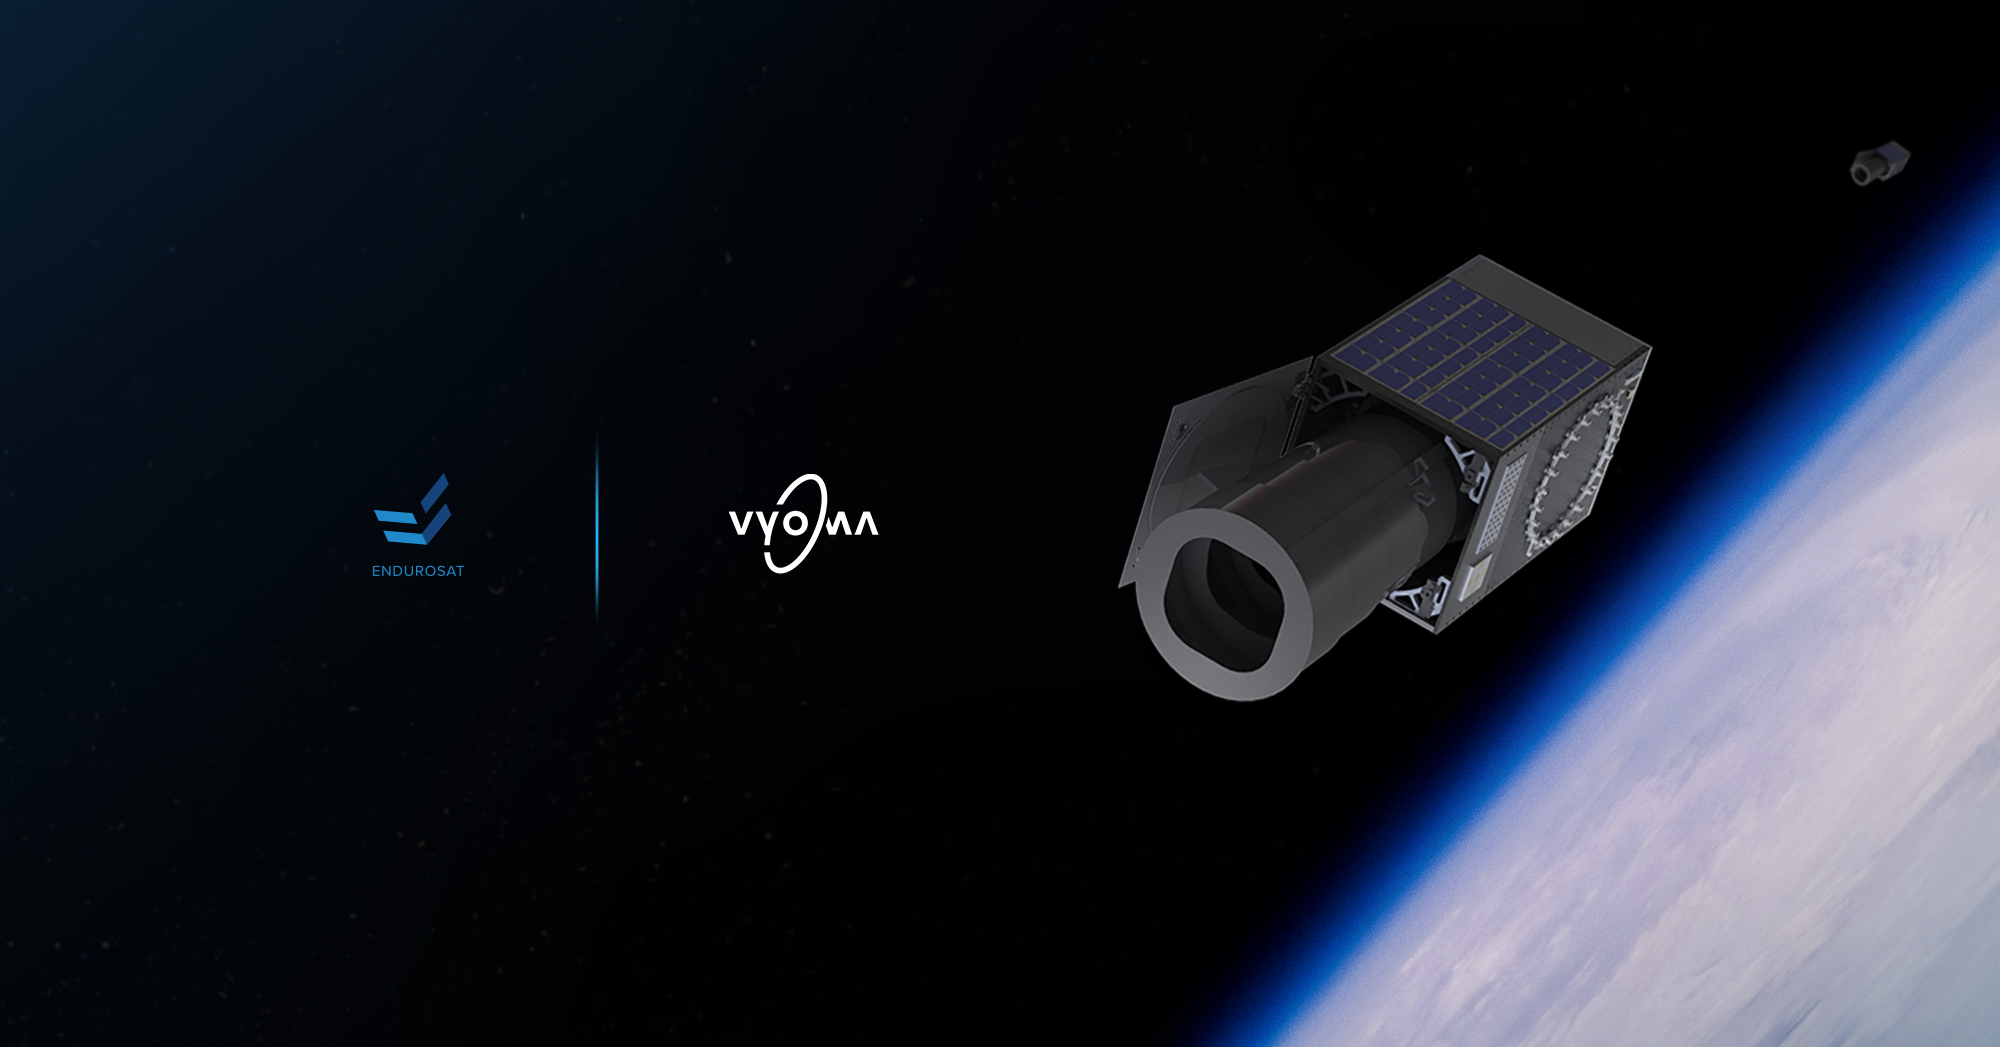 EnduroSat to build Vyomas space situational awareness constellation